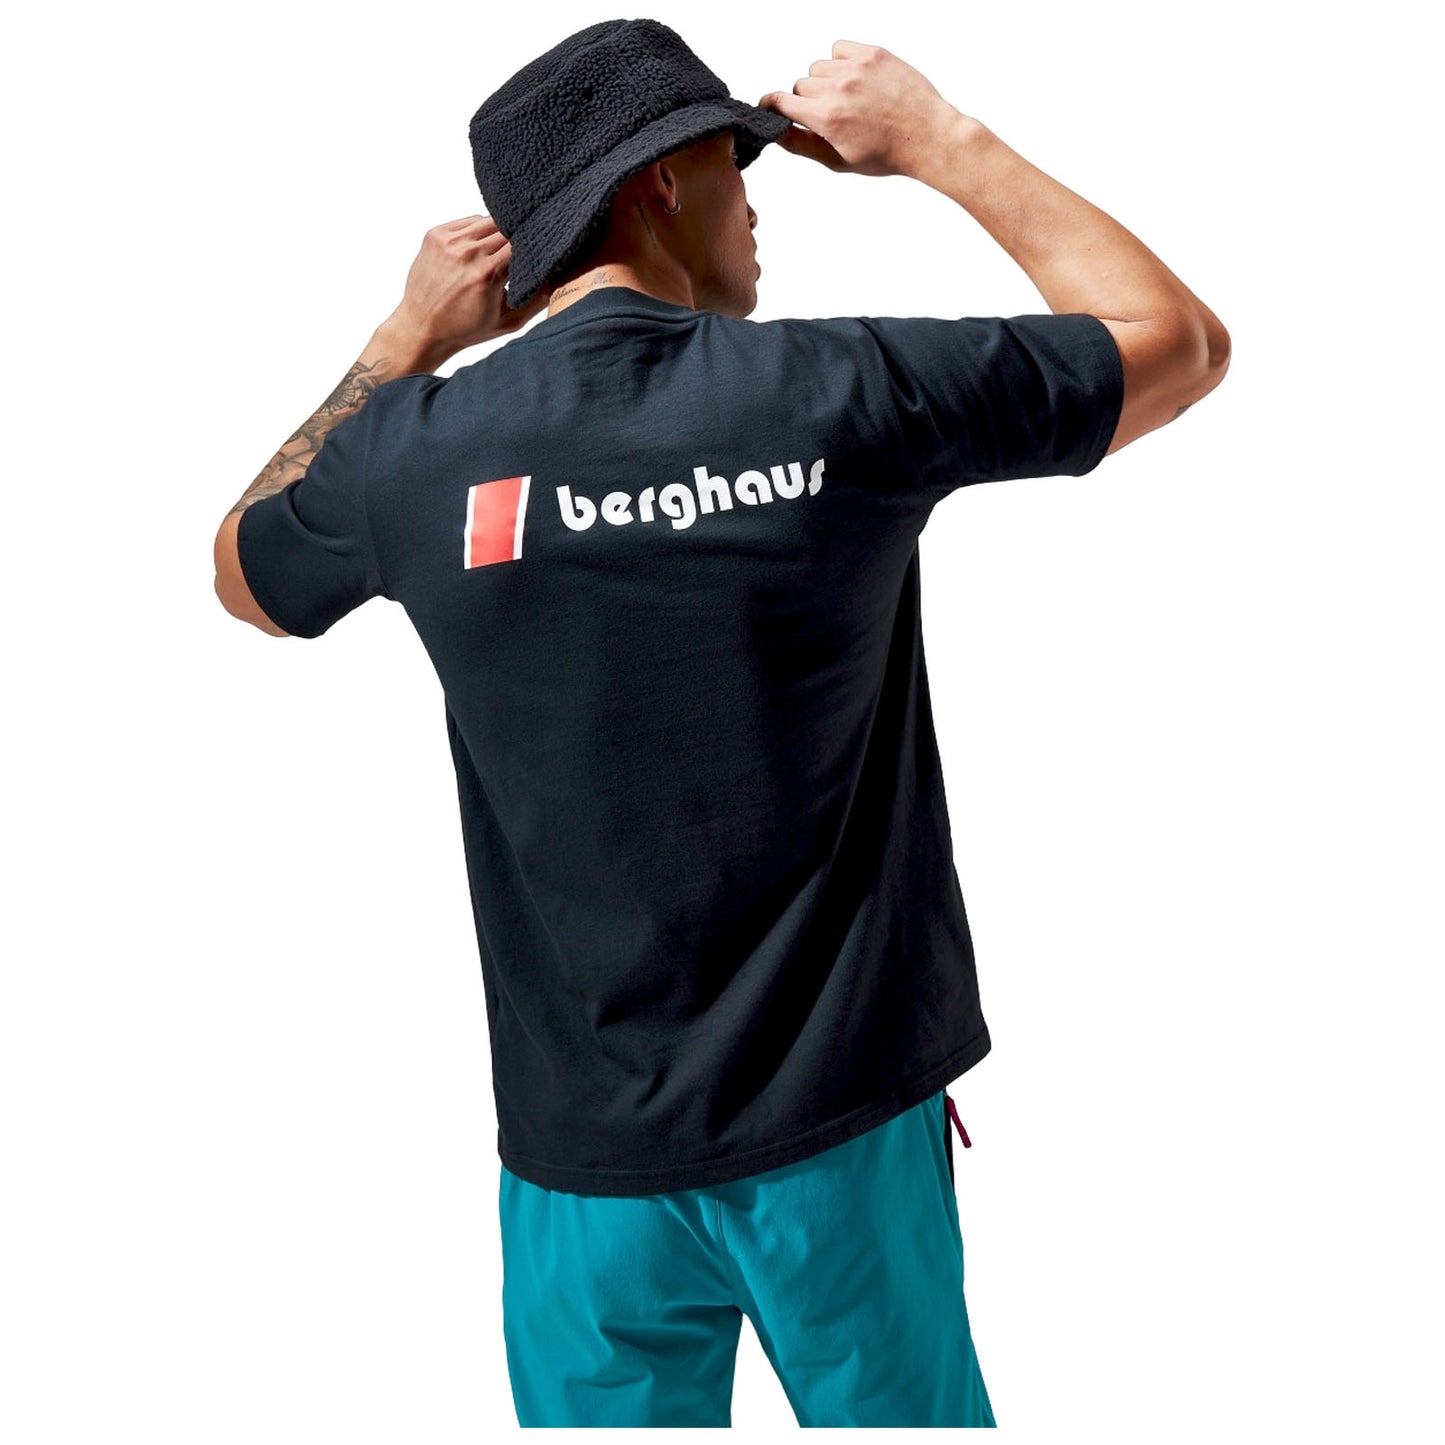 Berghaus Unisex Heritage F&B Logo T-Shirt